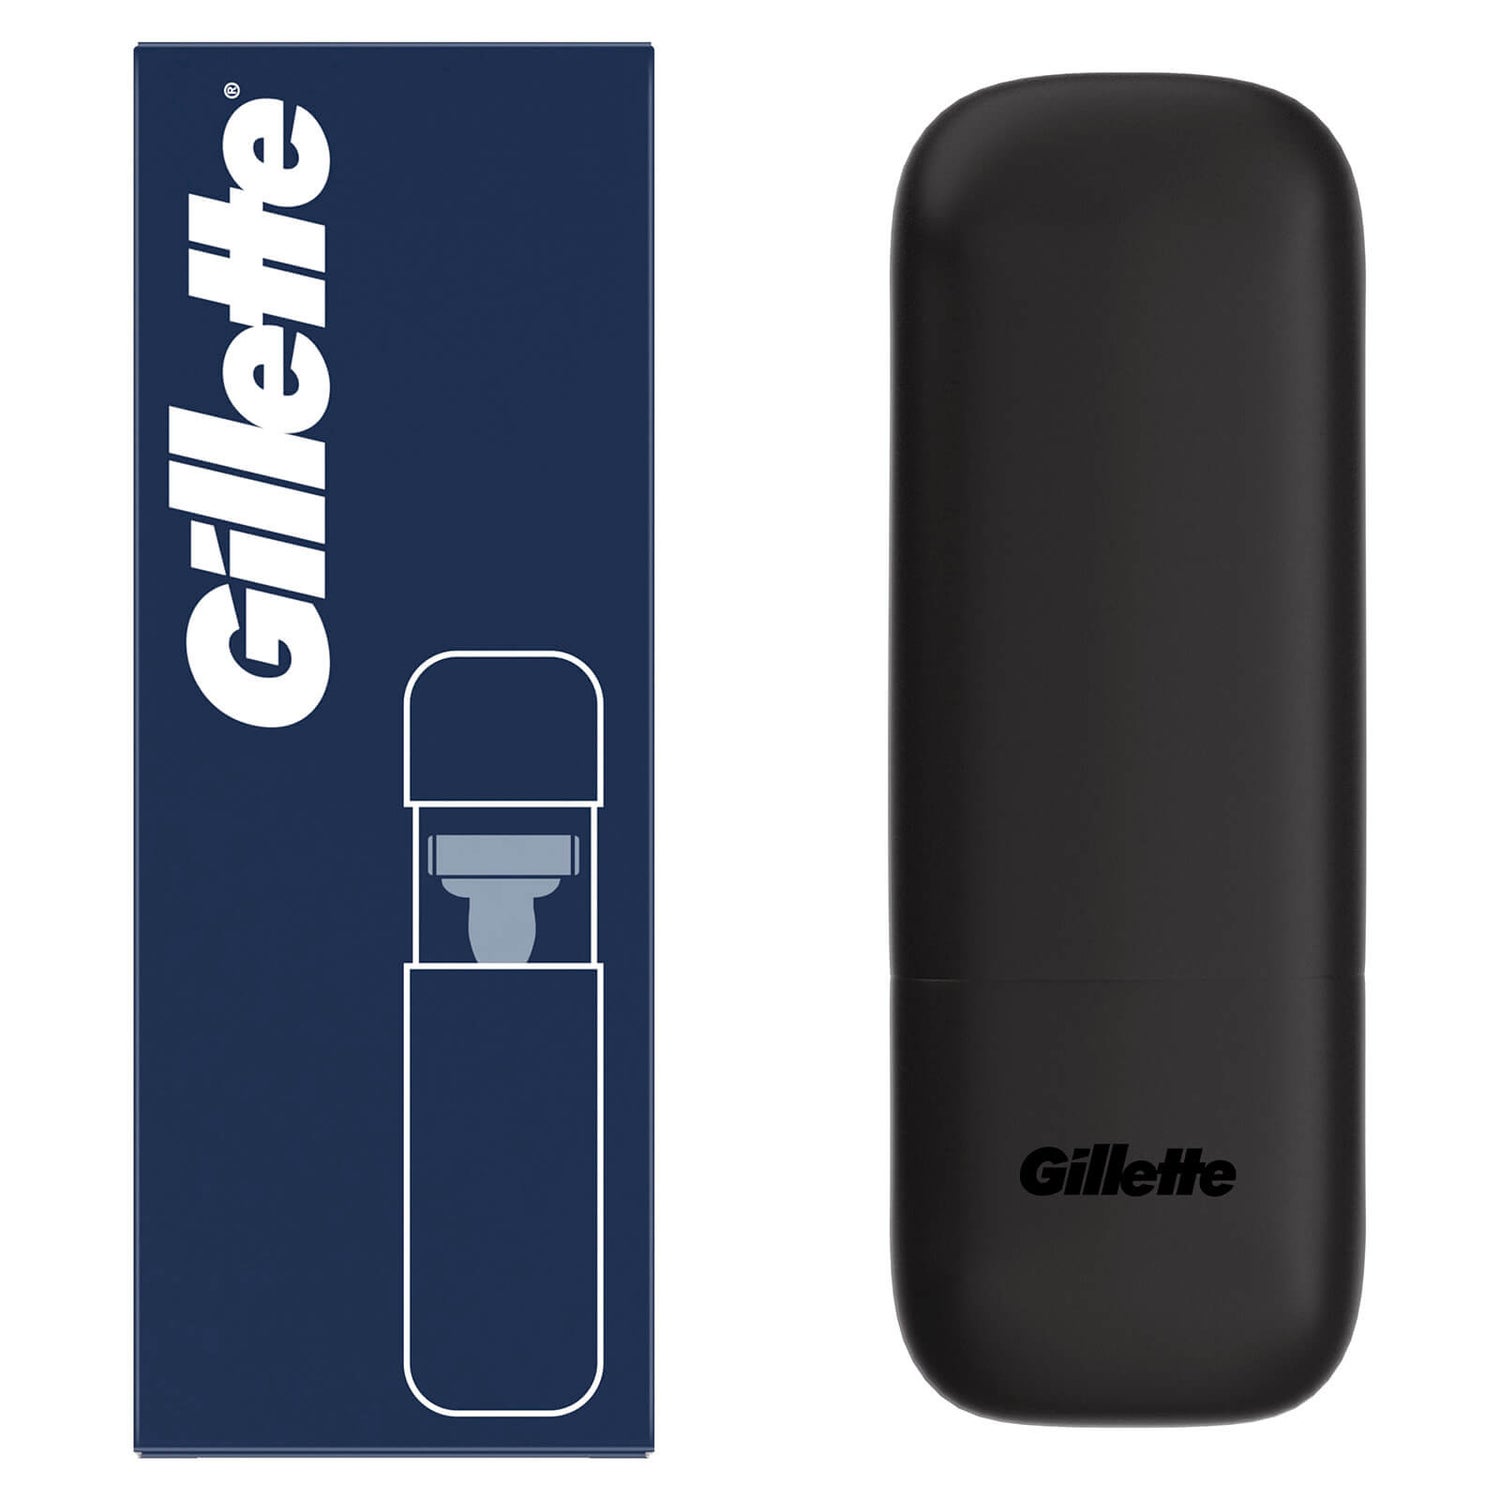 Gillette Mach3 Reiseetui